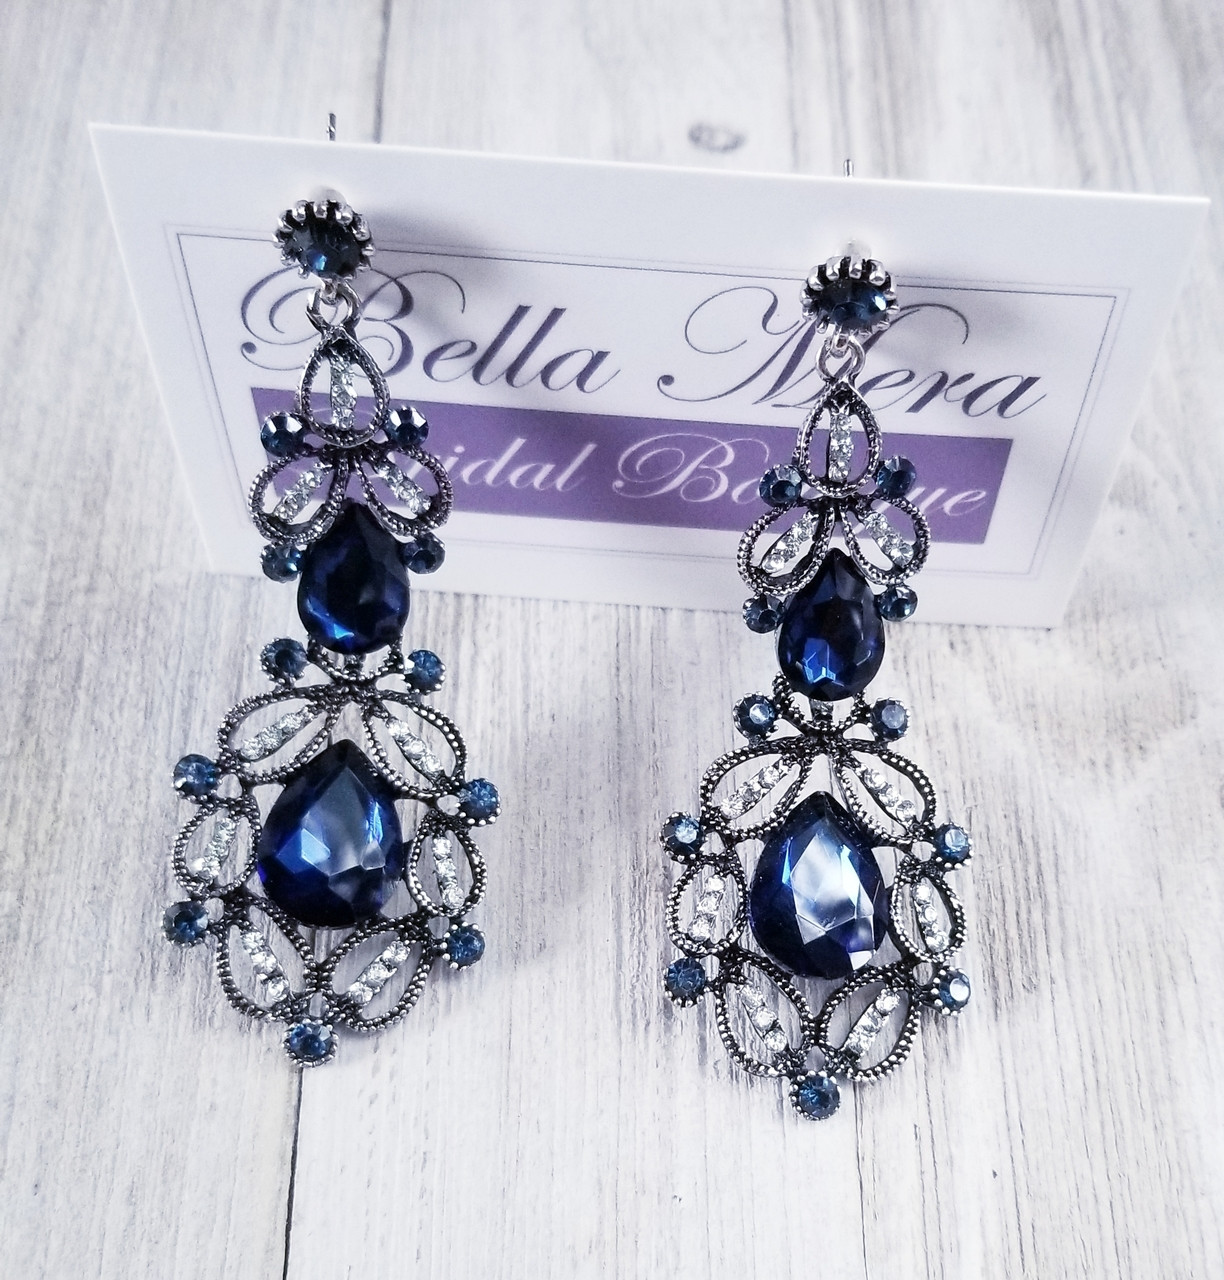 Bella Mera Studio Antique Black/Royal Blue Chandelier Earrings